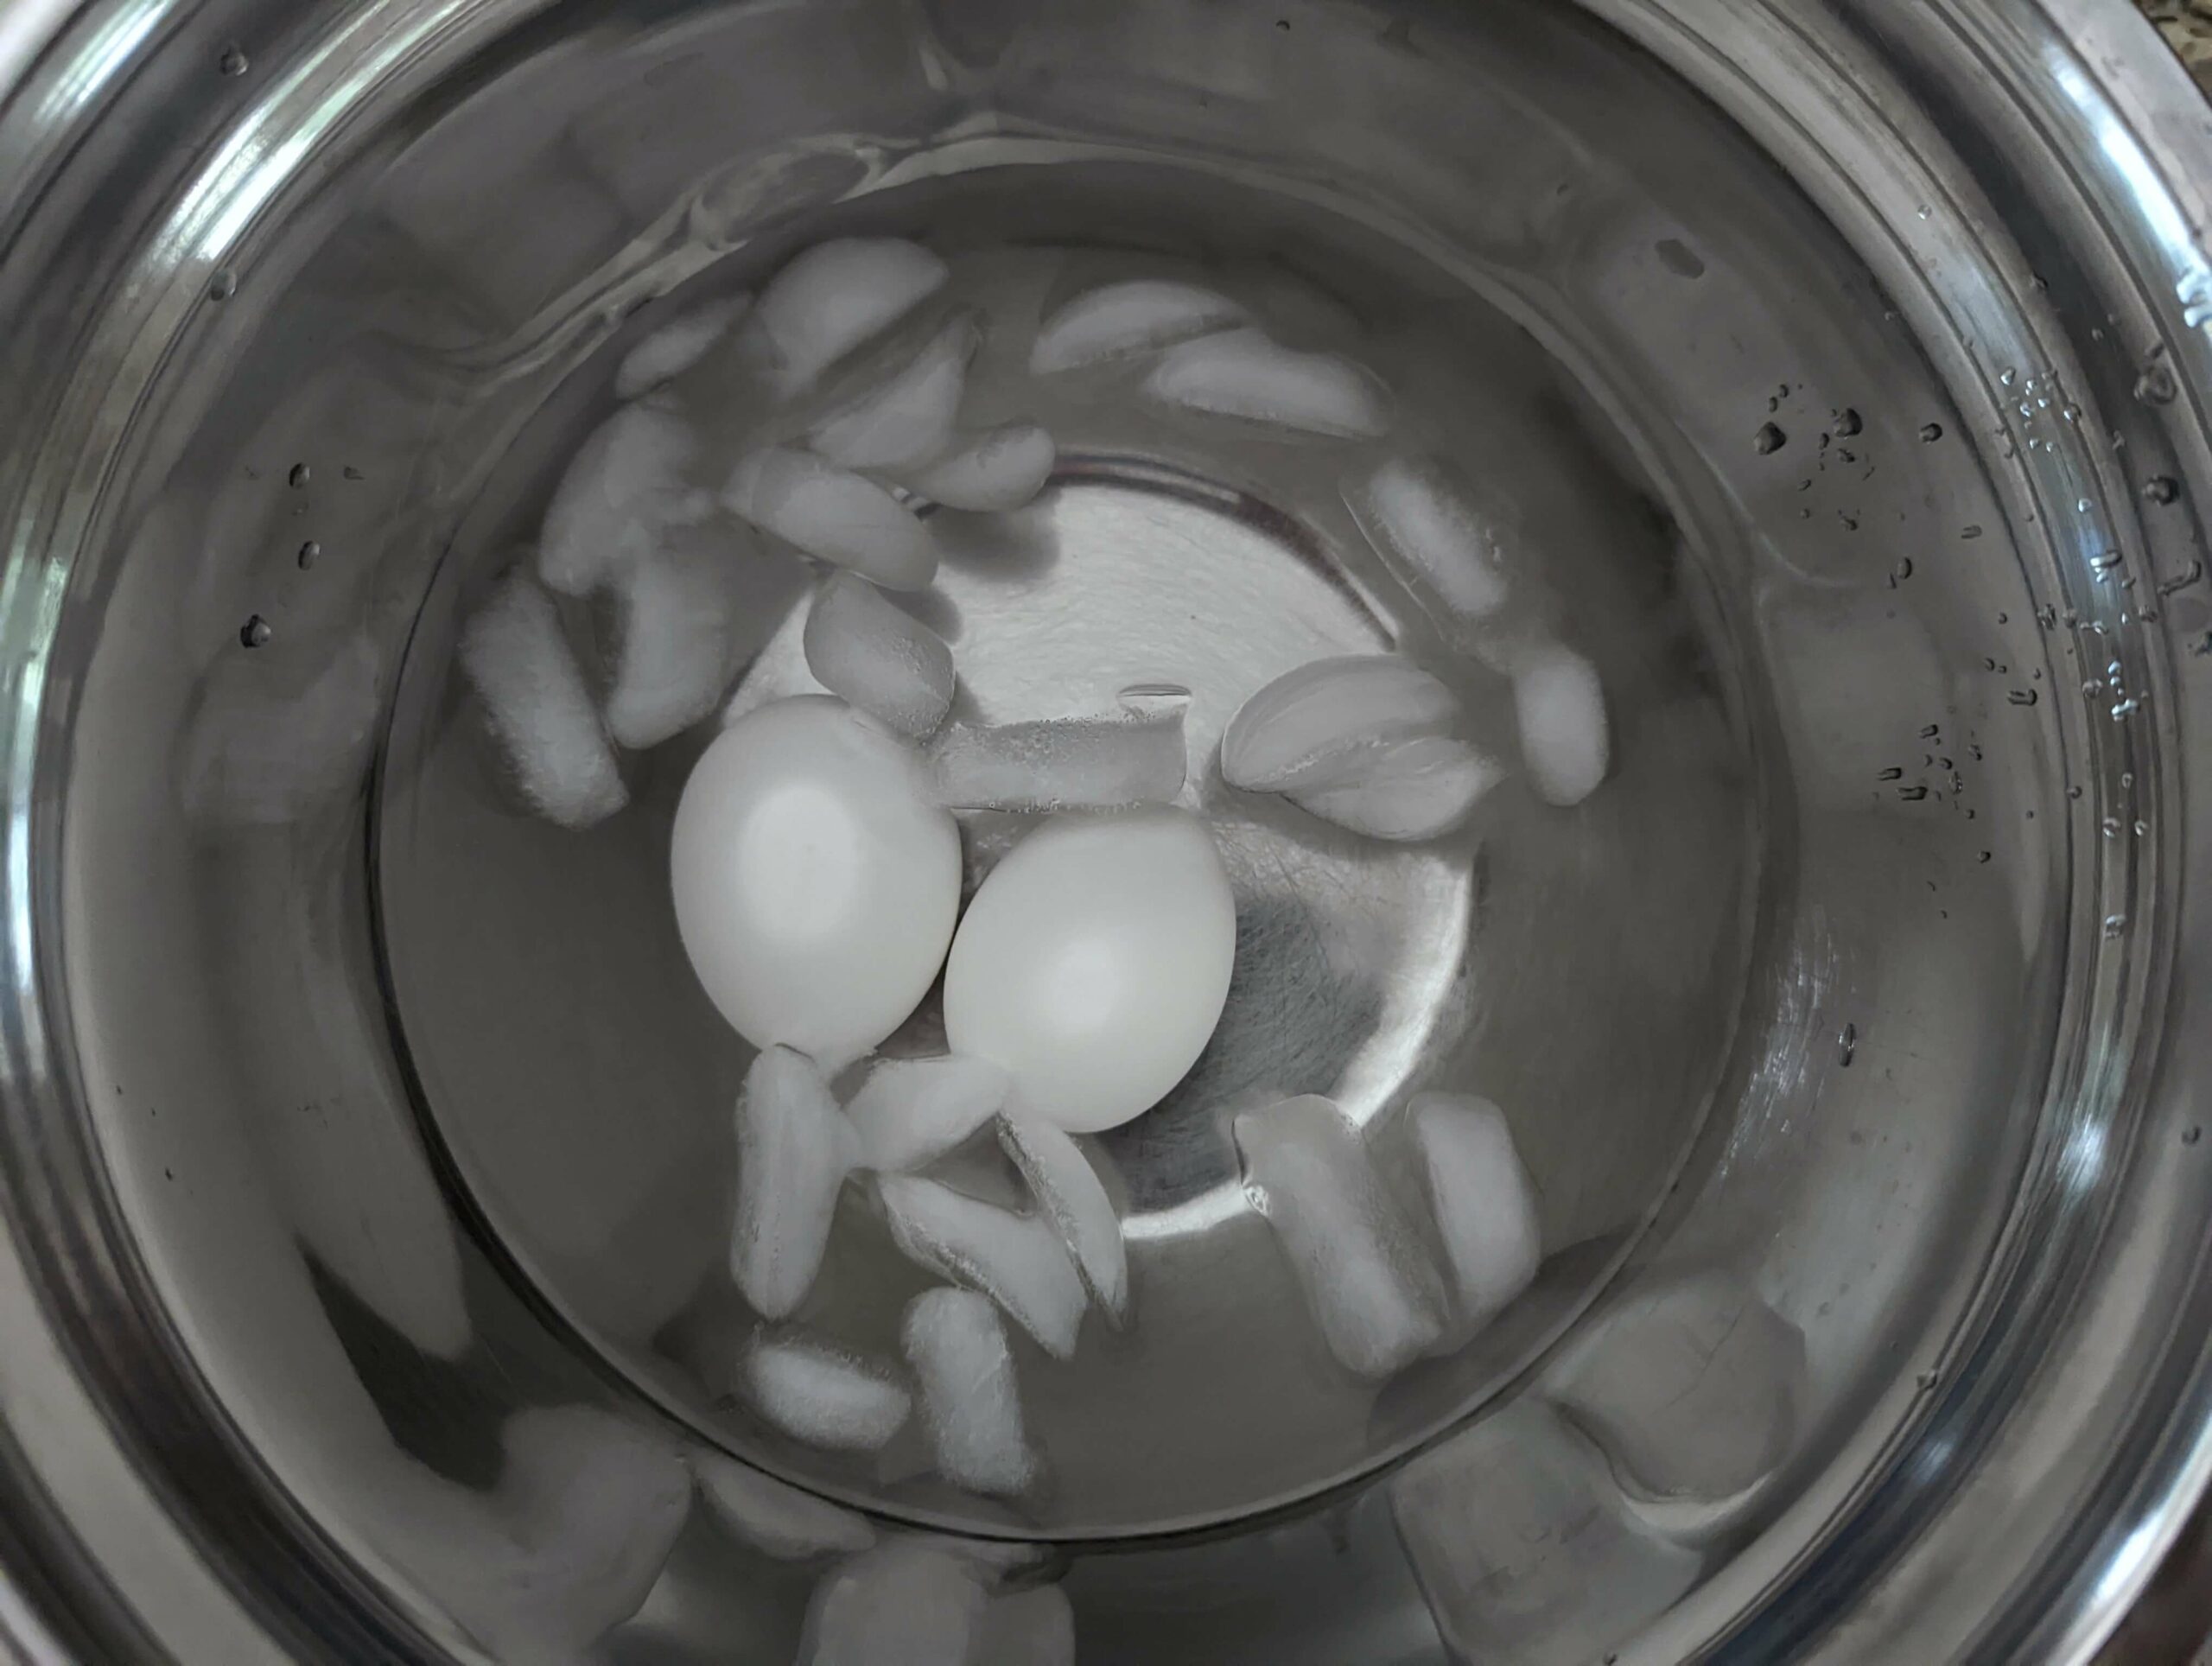 Add the eggs to an ice bath.